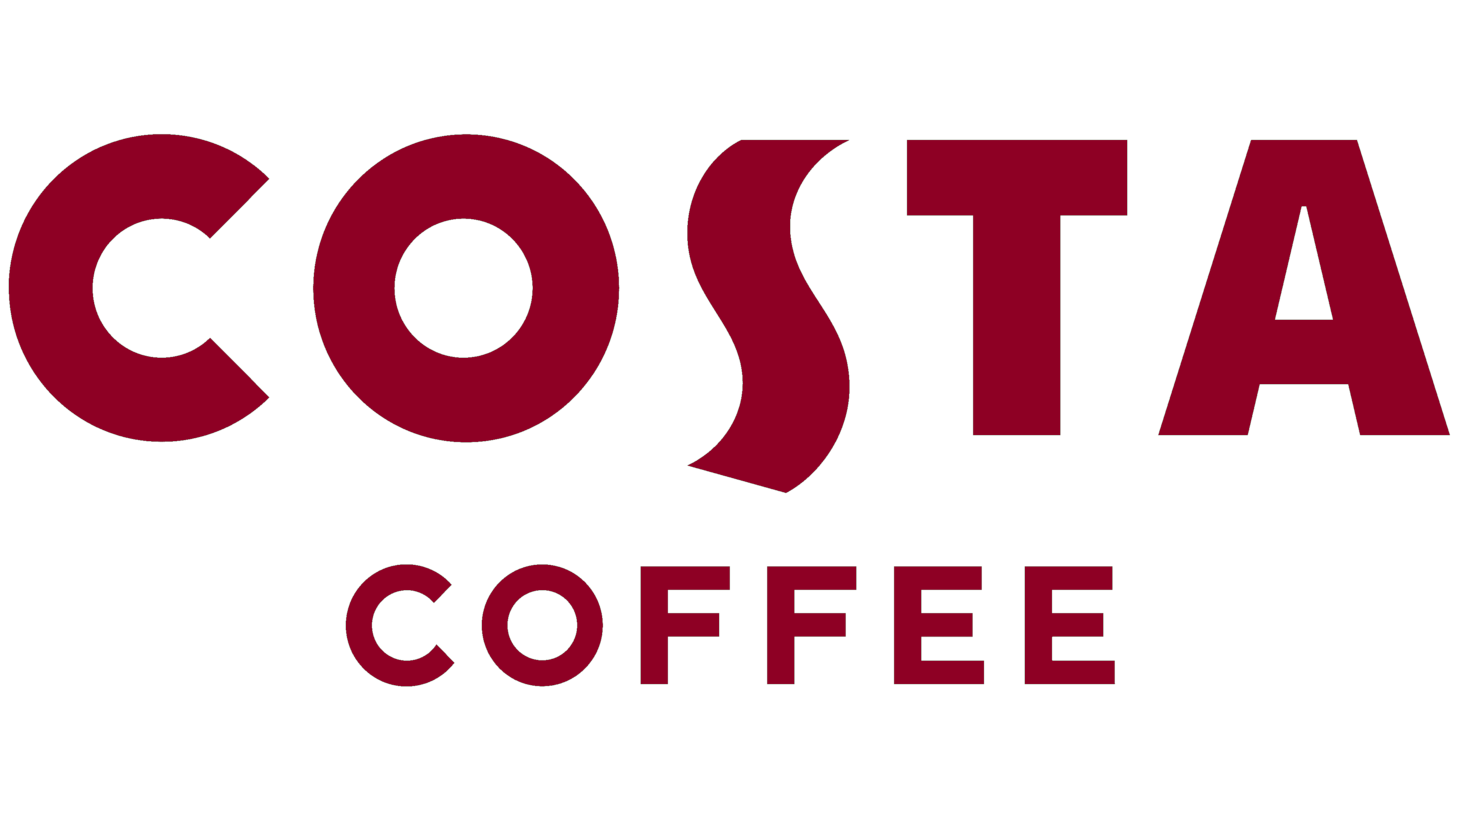 Costa coffee symbol